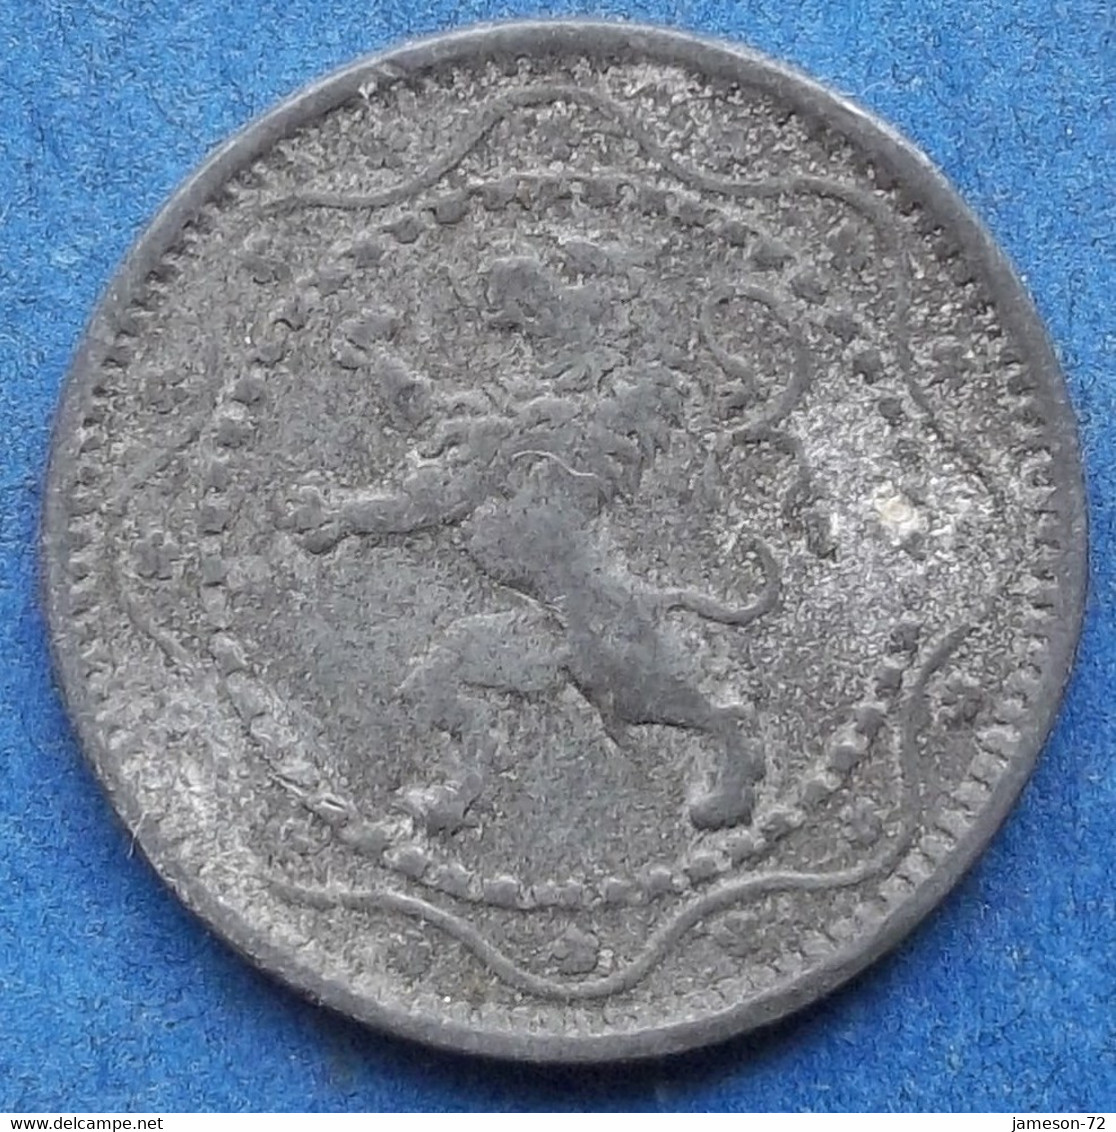 BELGIUM - 5 Centimes 1916 KM# 80 WWI German Occupation Zinc - Edelweiss Coins - Sin Clasificación